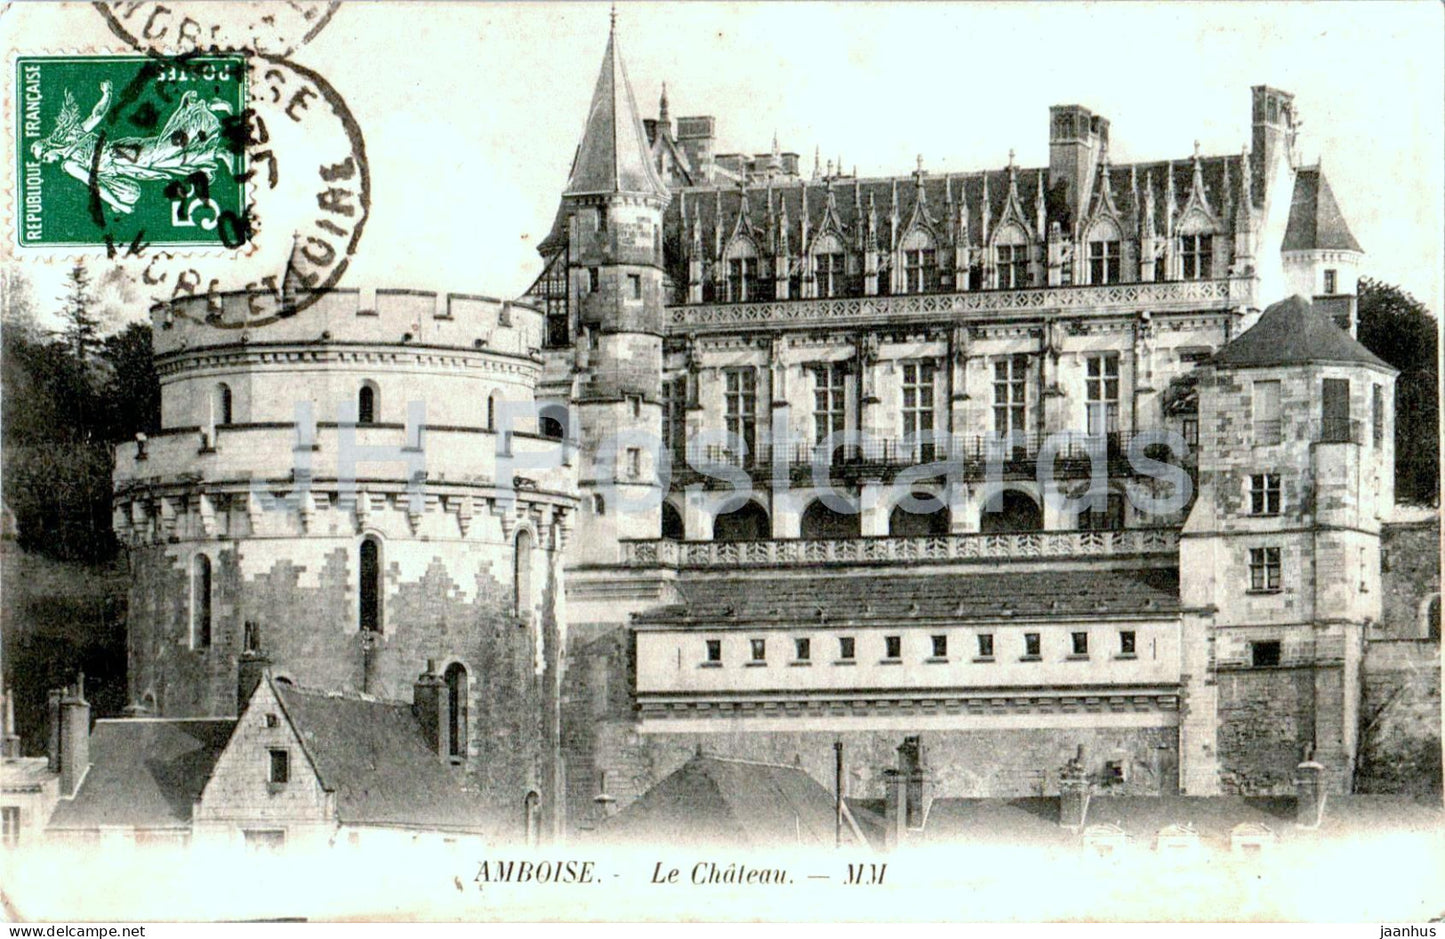 Amboise - Le Chateau - MM - castle - old postcard - France - used - JH Postcards